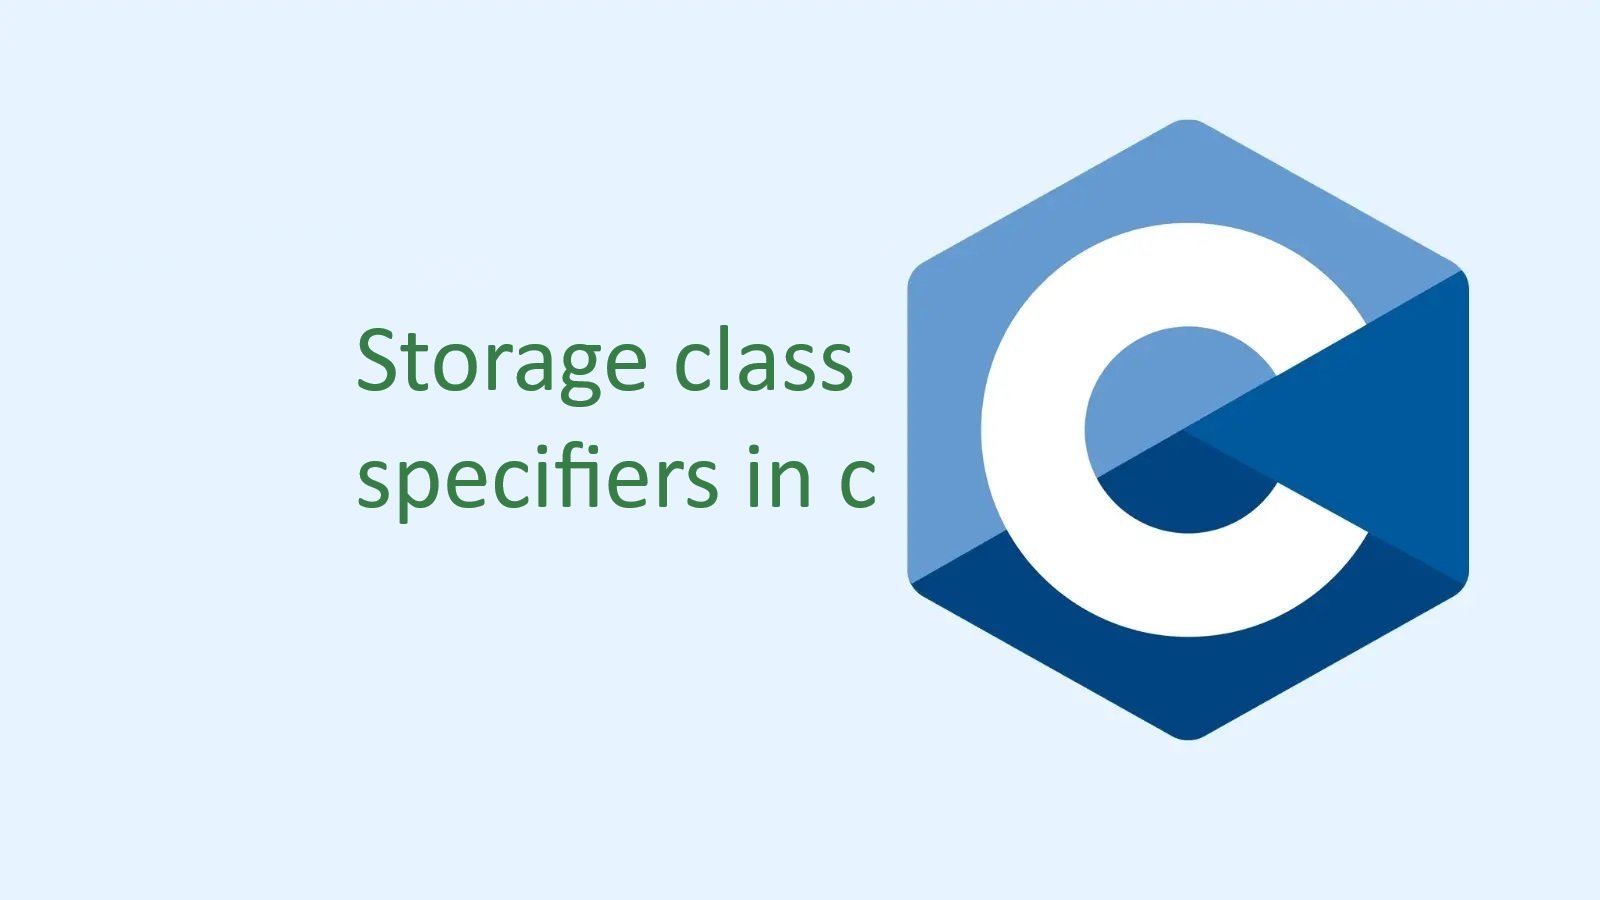 Storage class specifiers in c